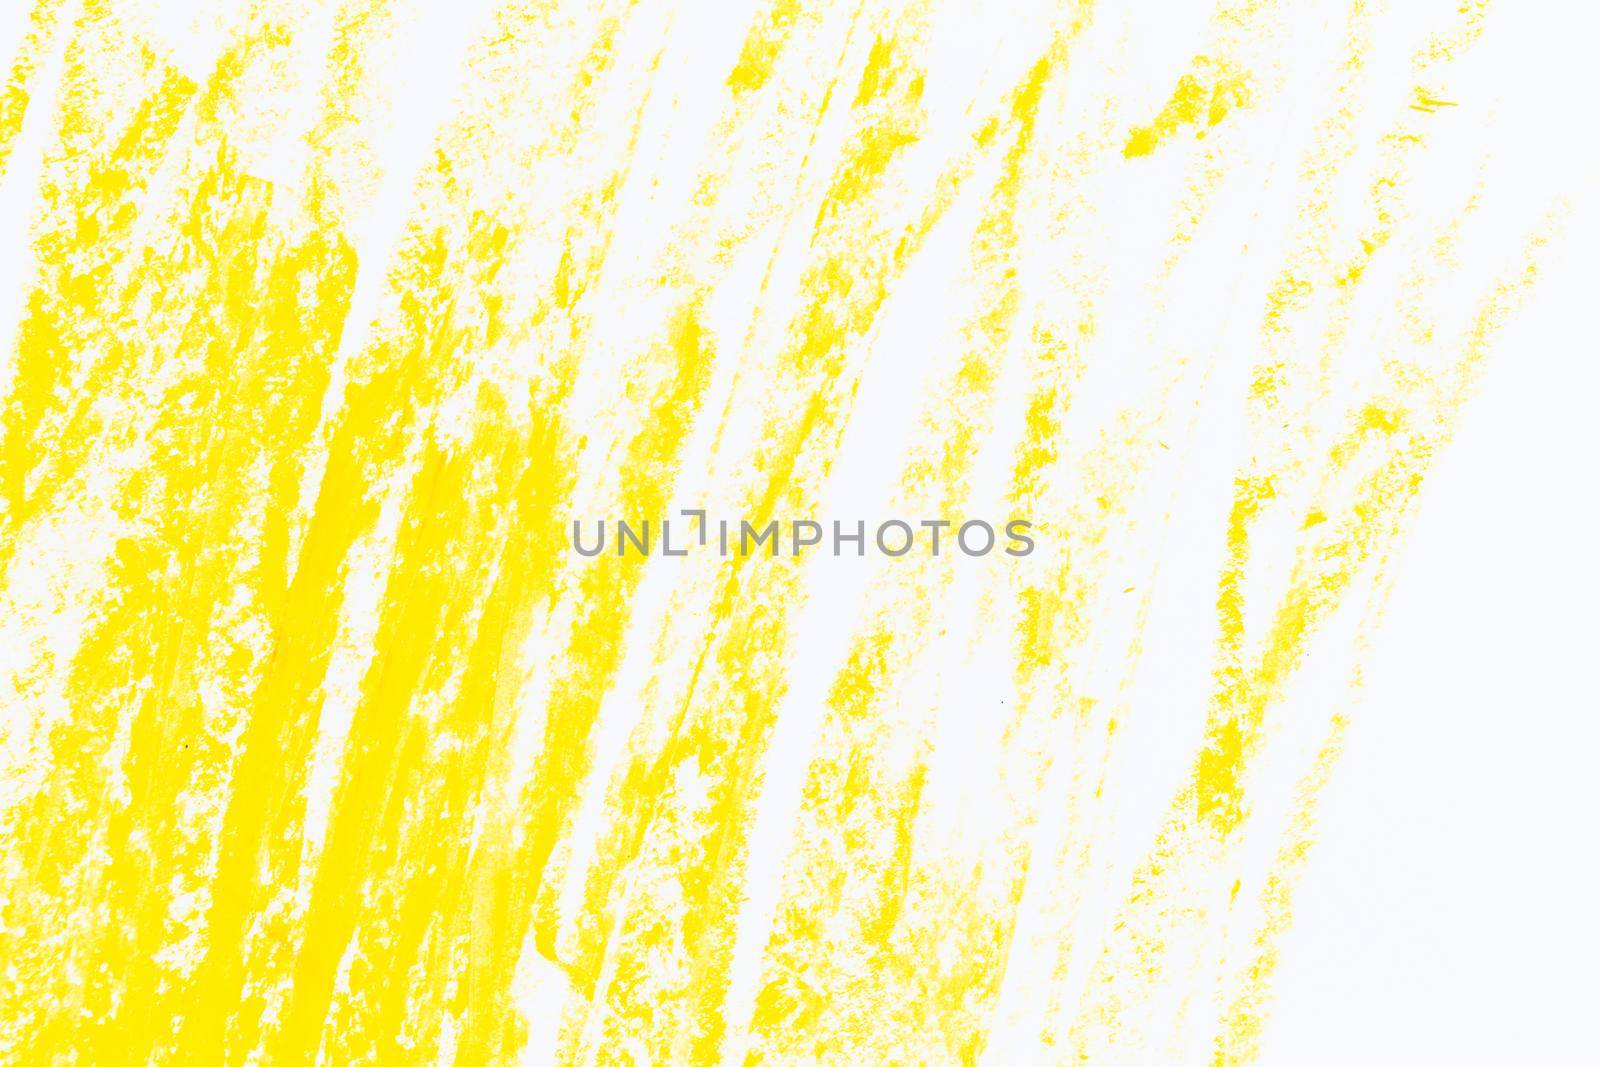 yellow white skatch crayons strockes texture background